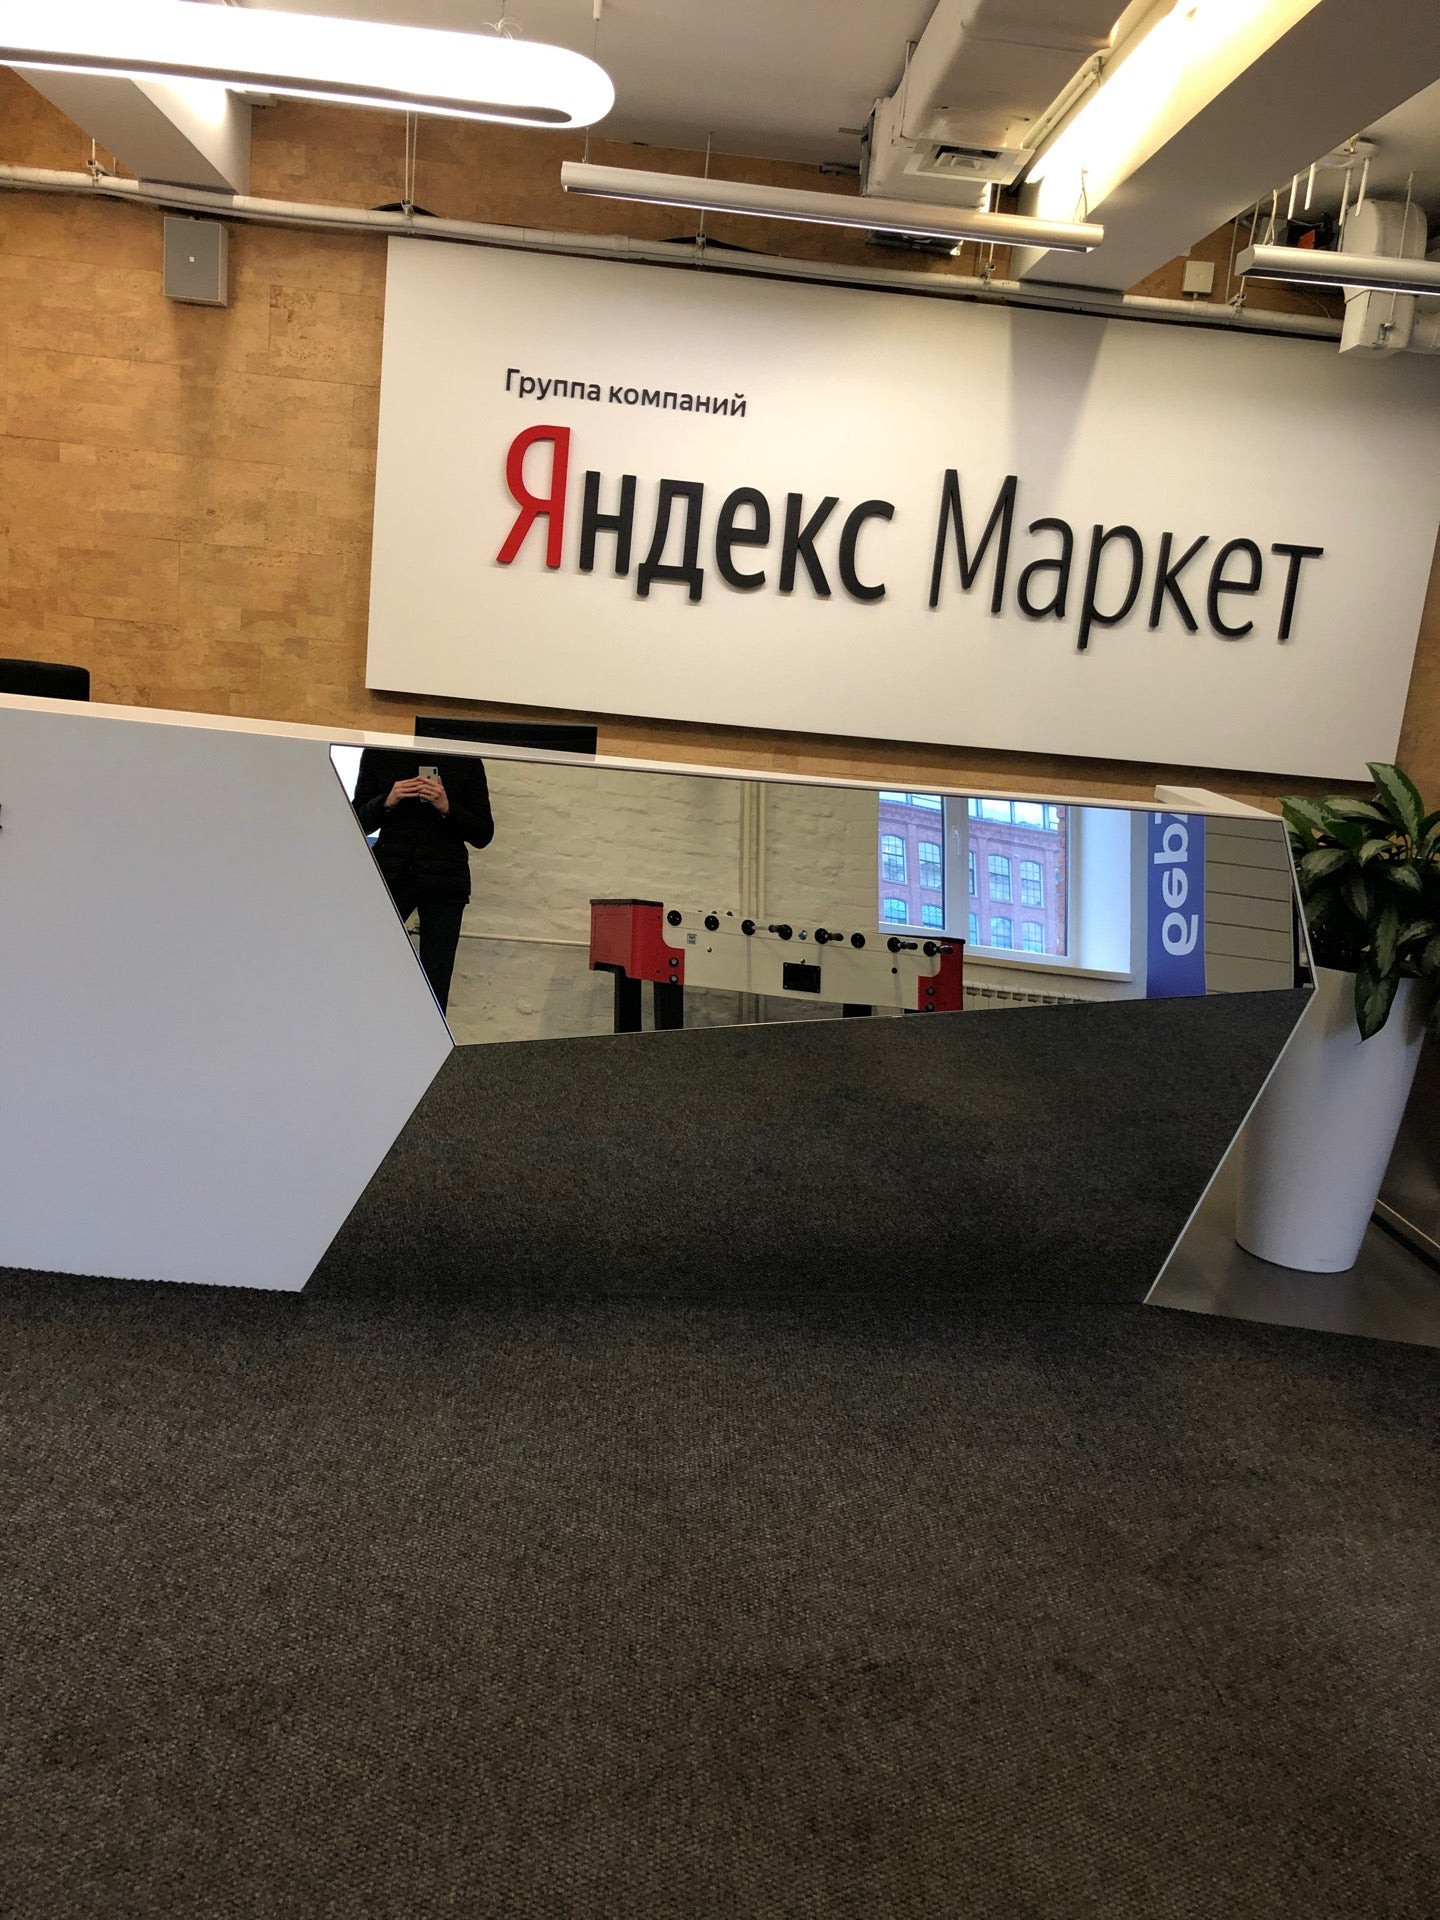 Офис маркет сайт. Офис Яндекса в Москве.